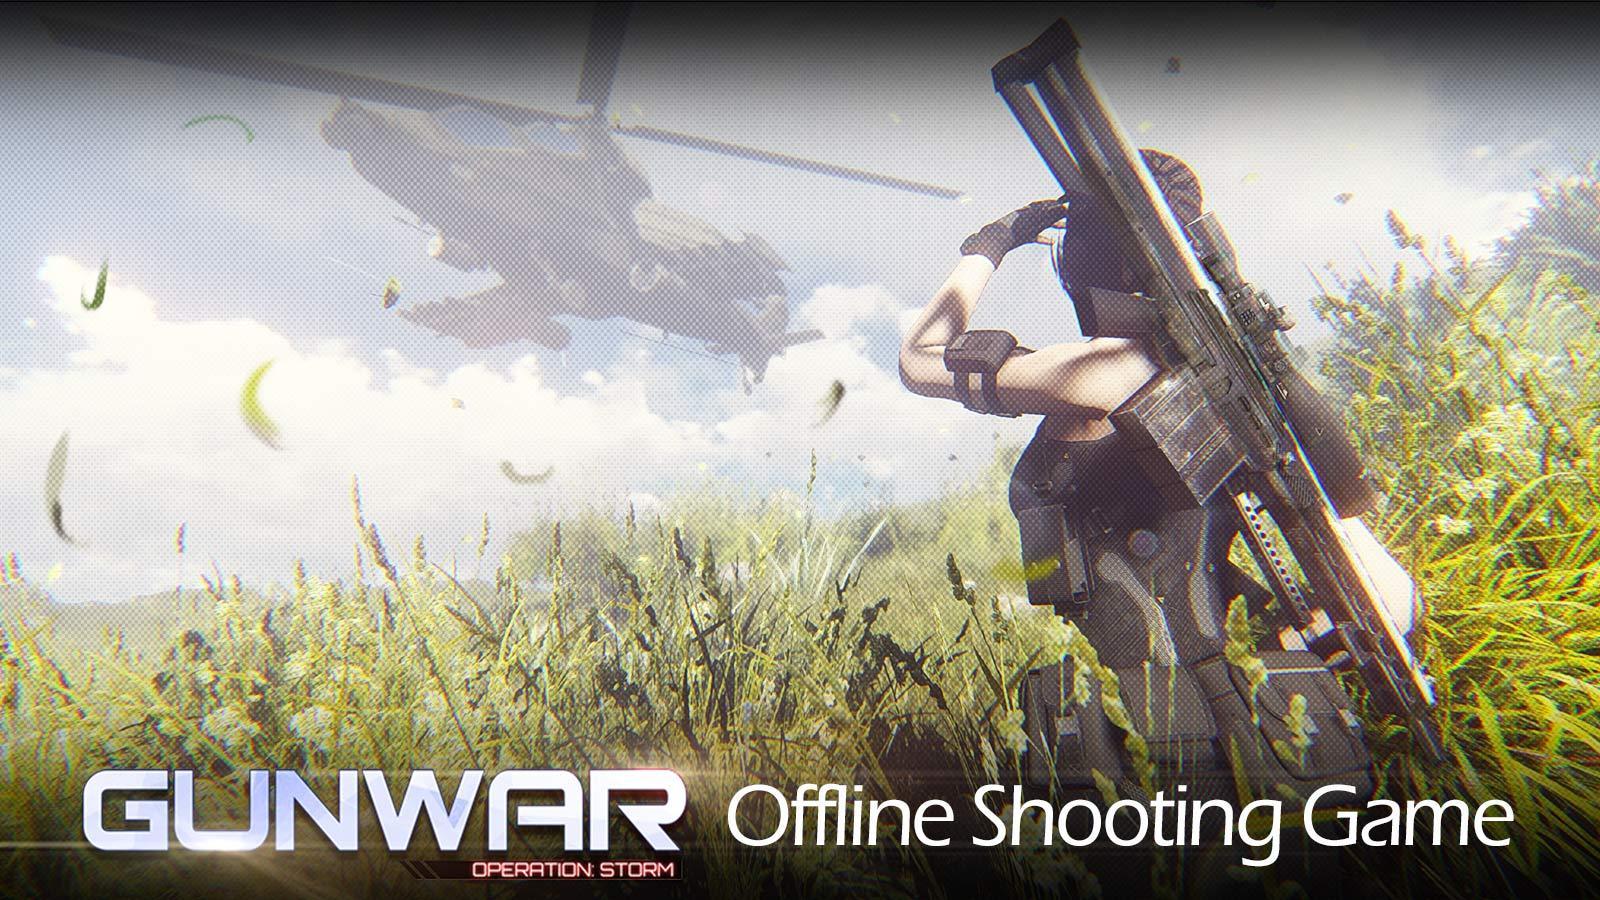 Gun Shoot War Q APK for Android - Download